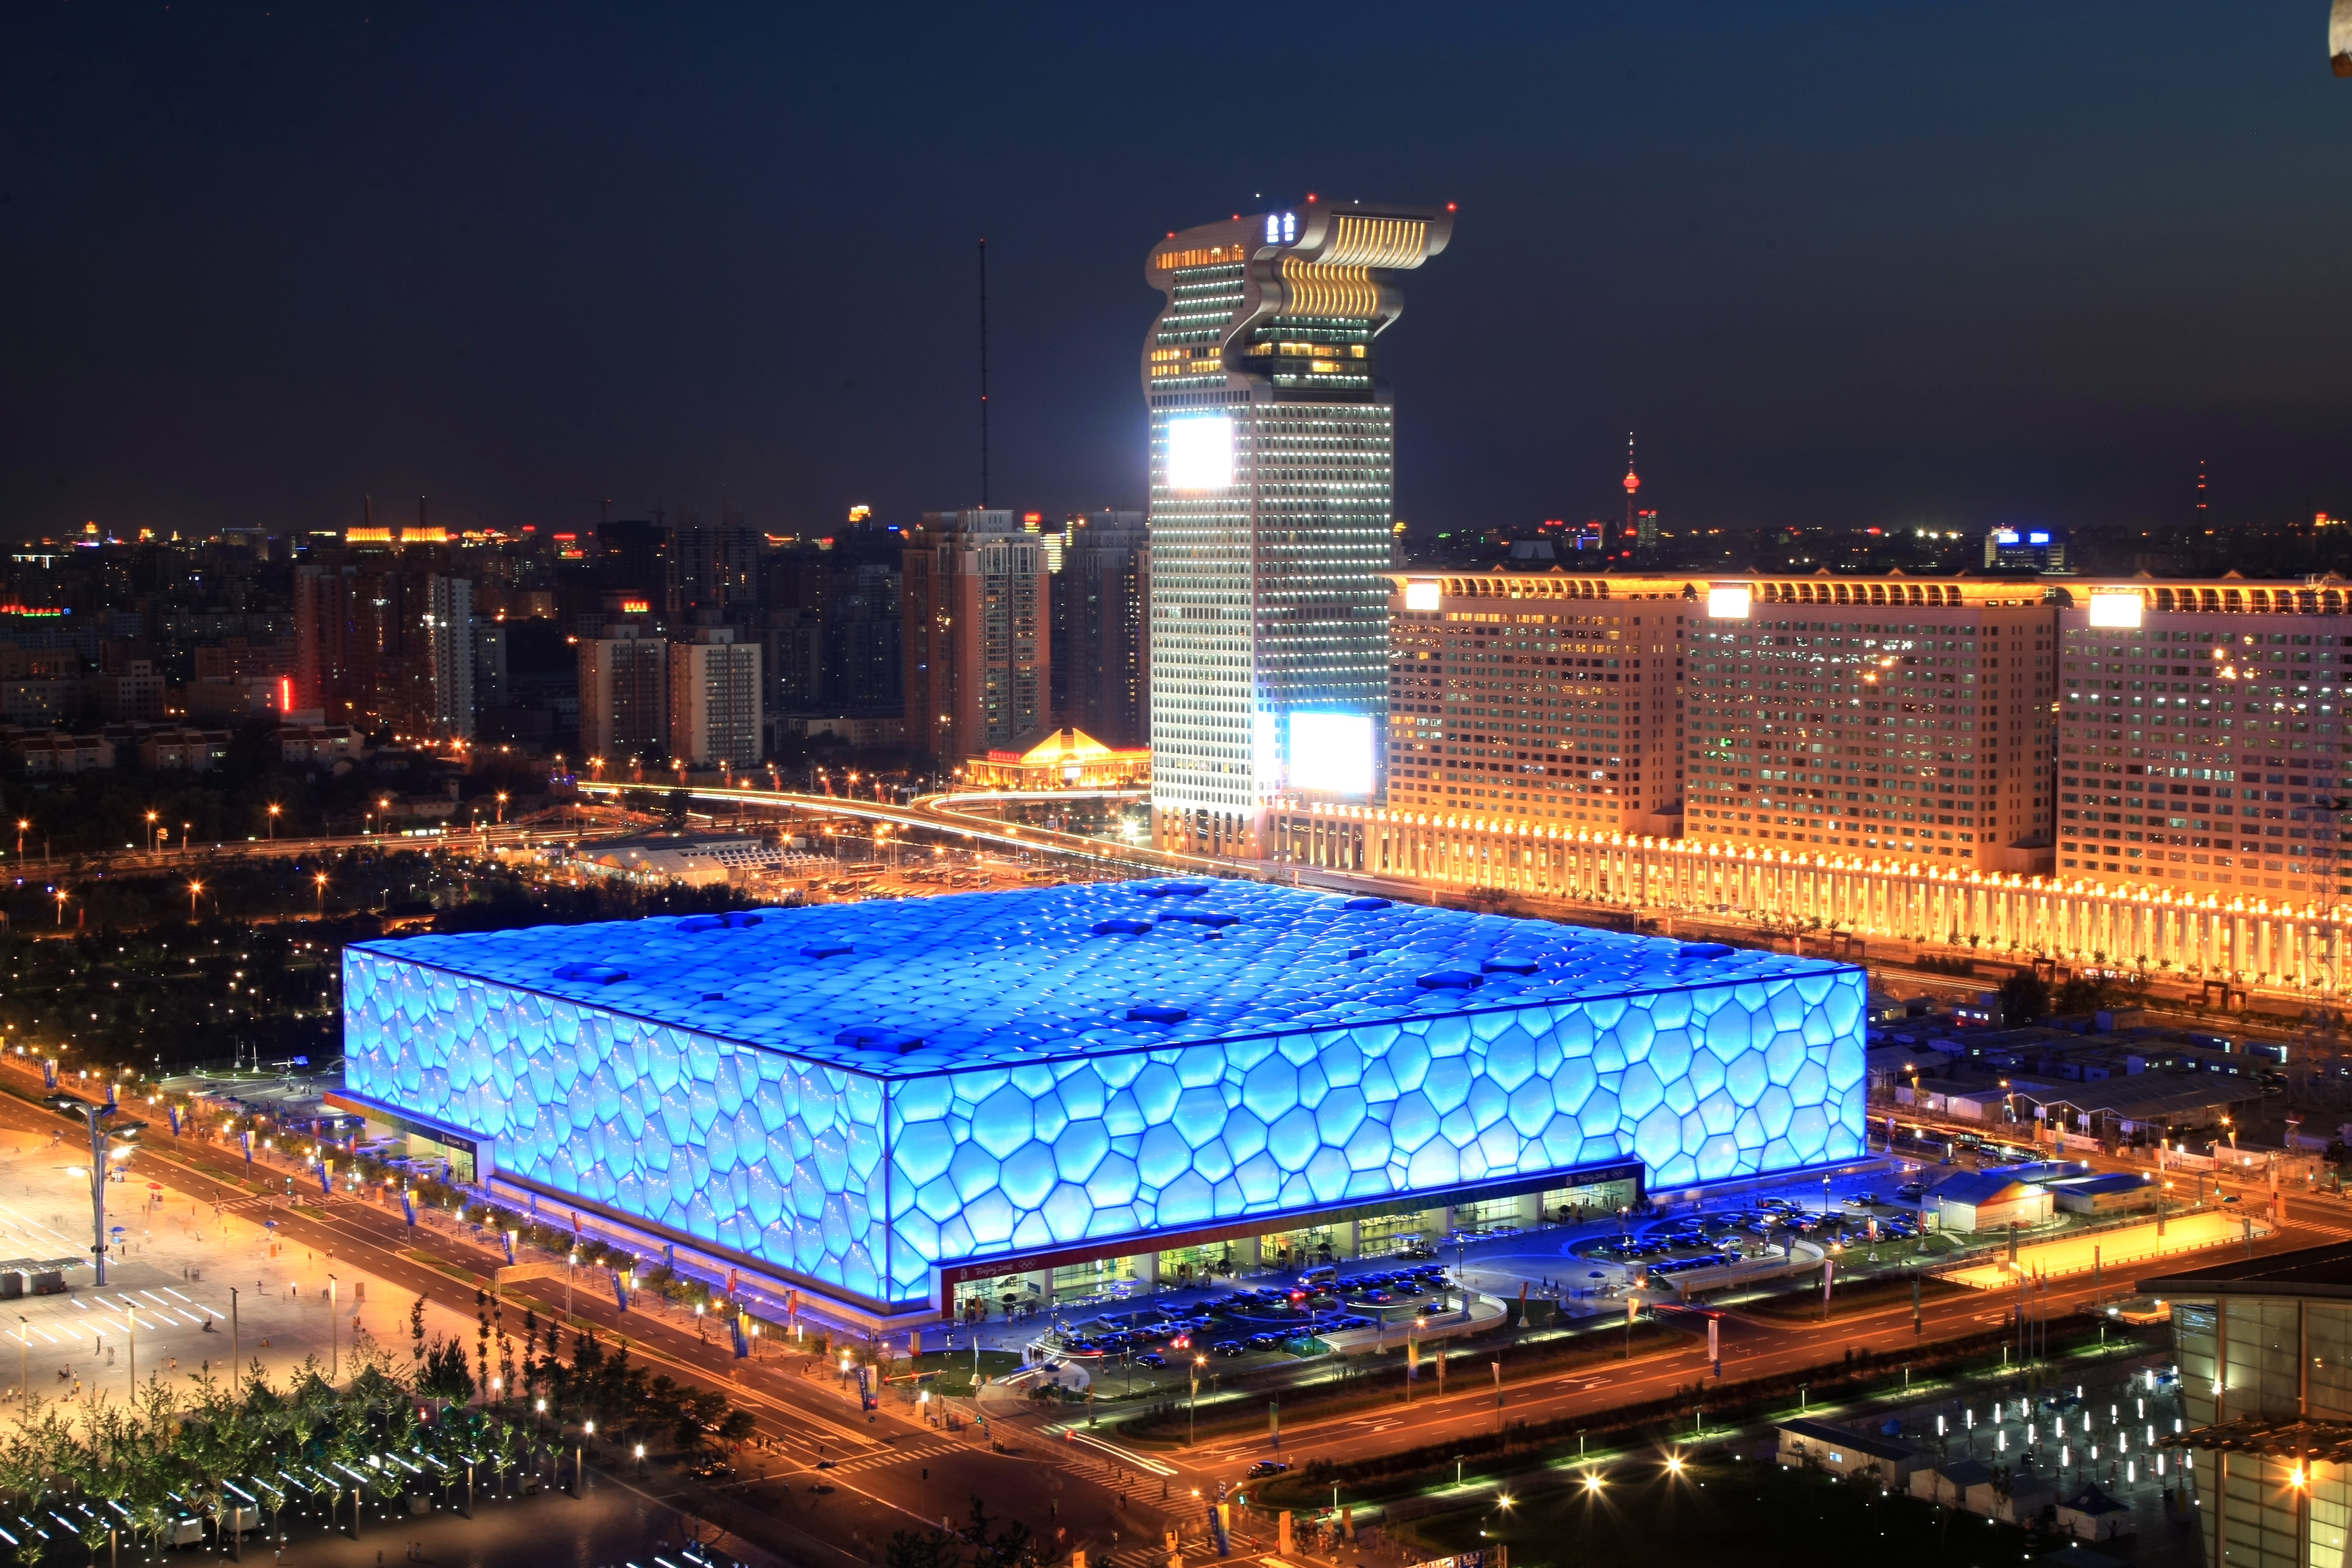 Nighttime exterior of Water Cube venue in Beijing 